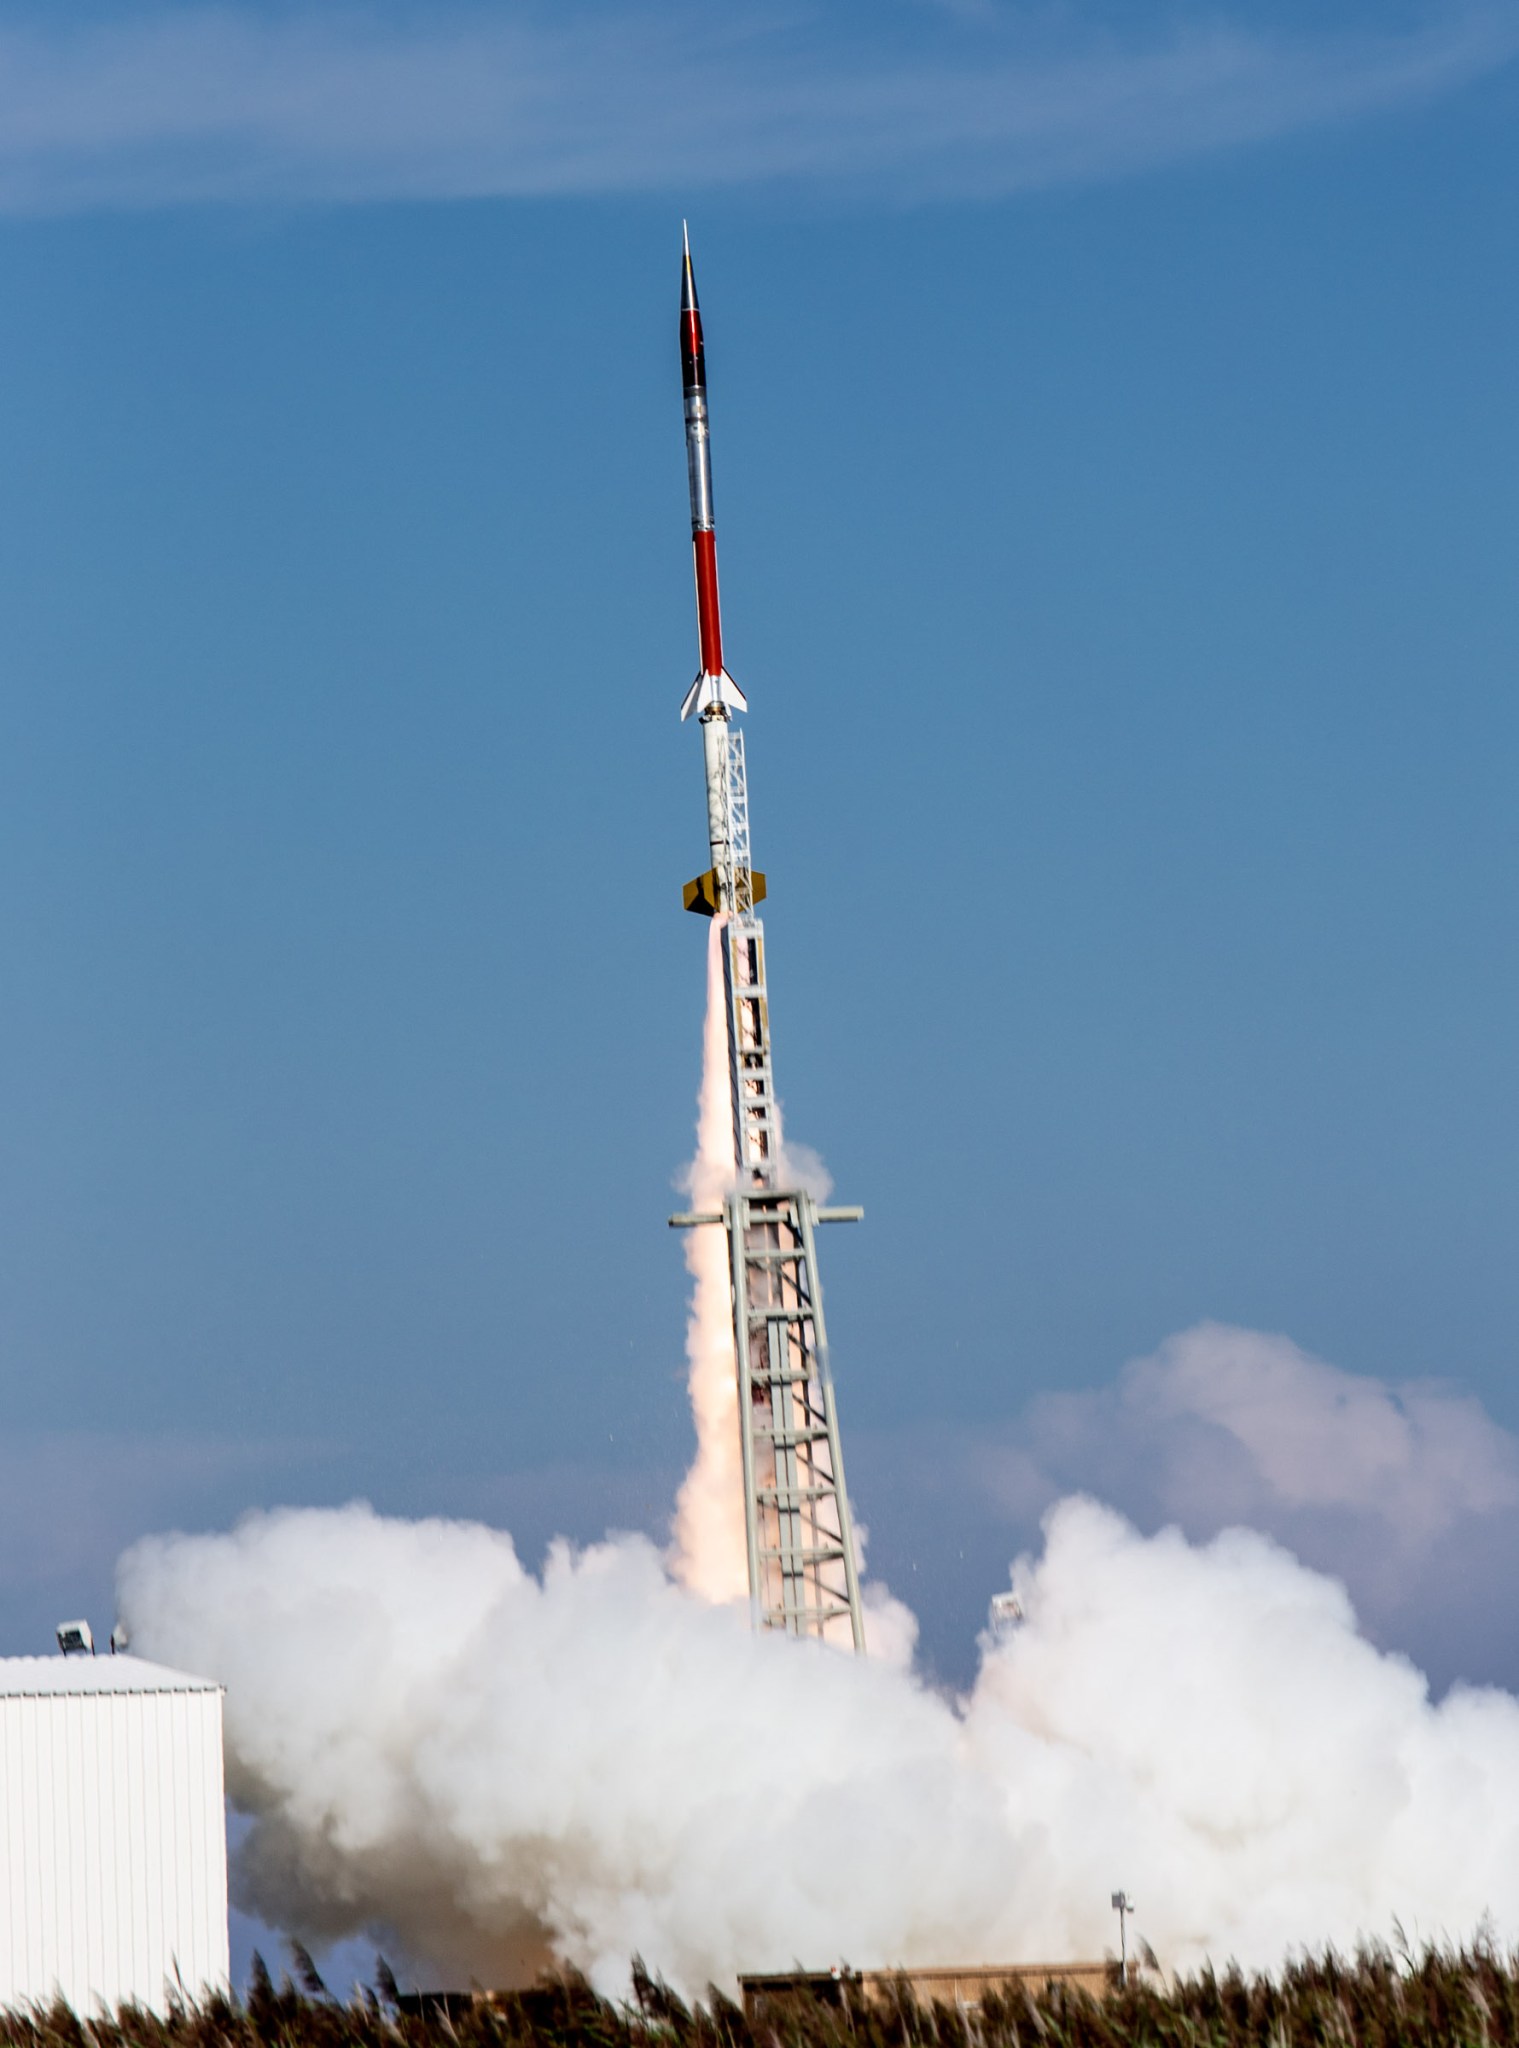 sounding rocket launching with plume of smoke underneath.